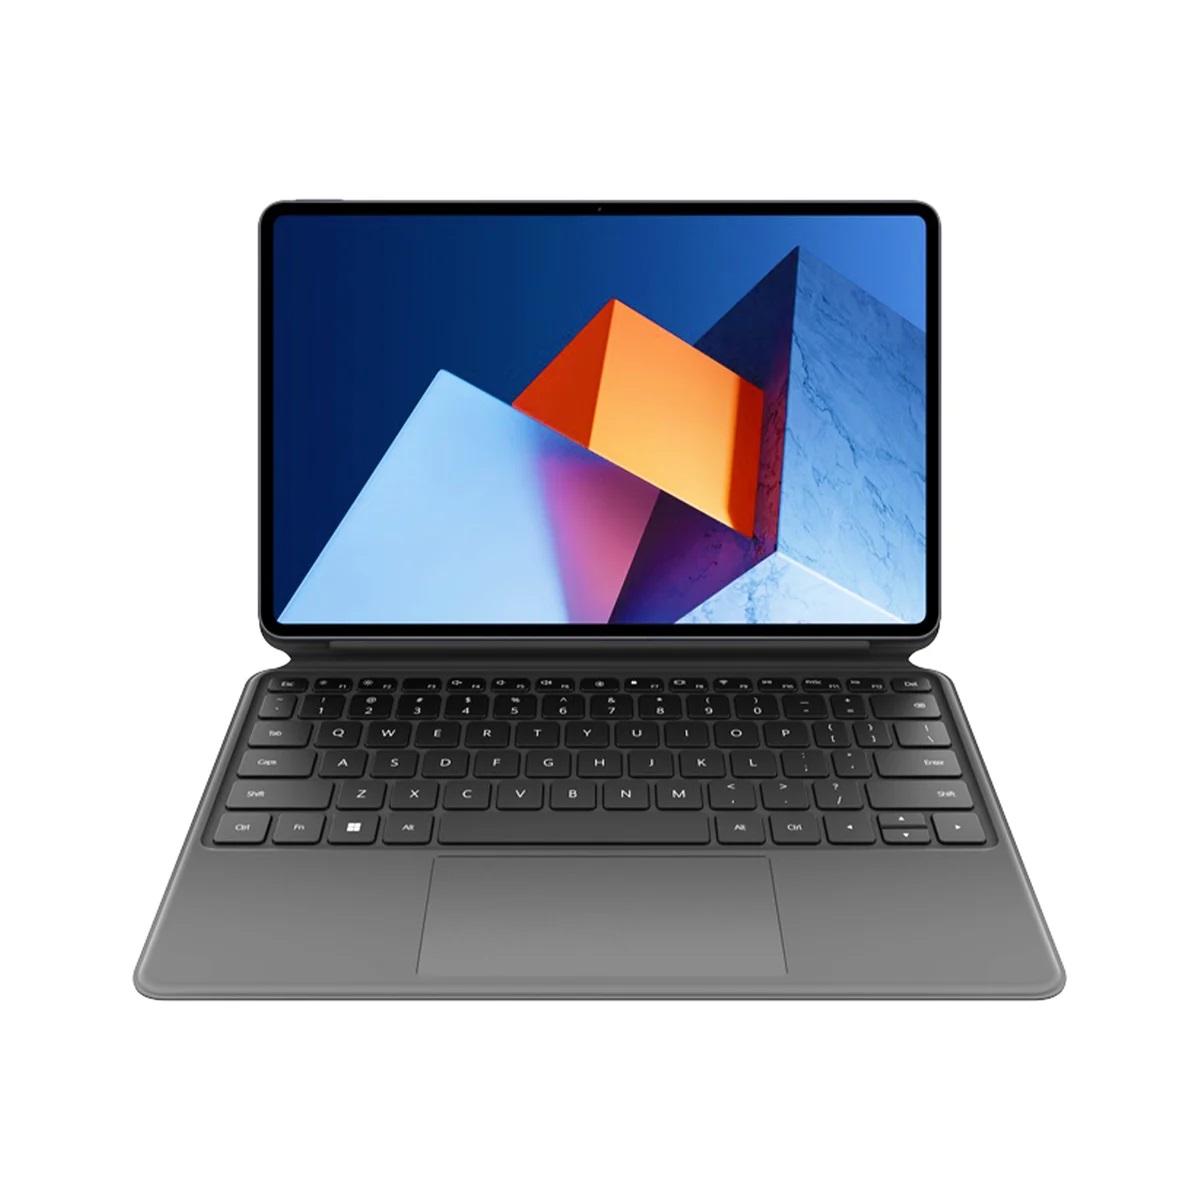 DRC-W38/Huawei MateBook E i3-1110G4 Nebula Gray 8GB 128GB I3 / 8GB / 128GB